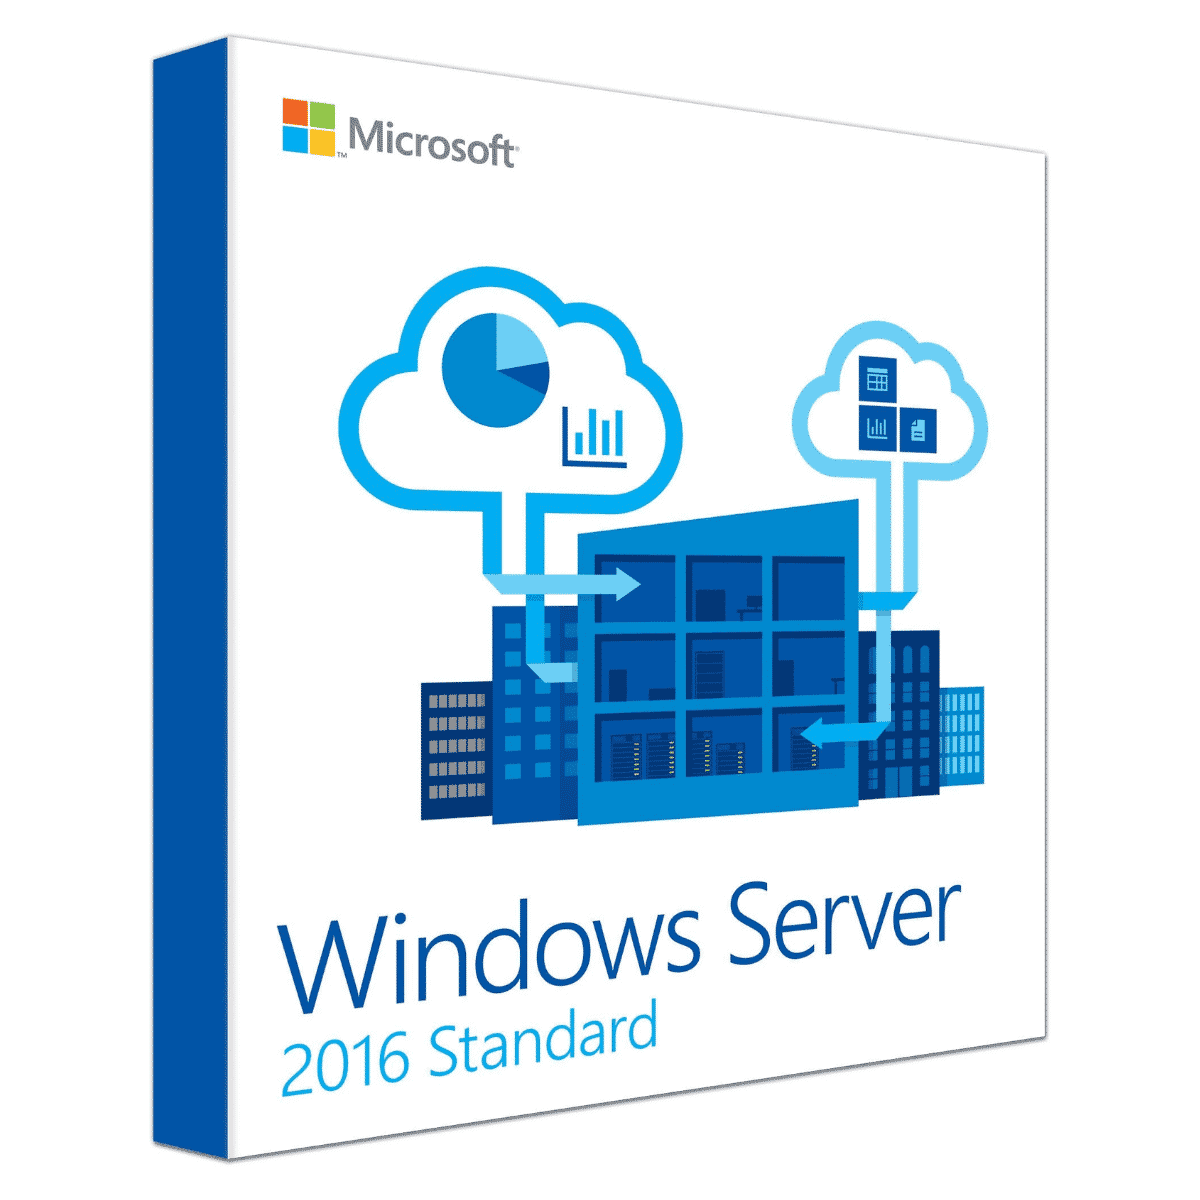 Windows Server 2016 Standard product key